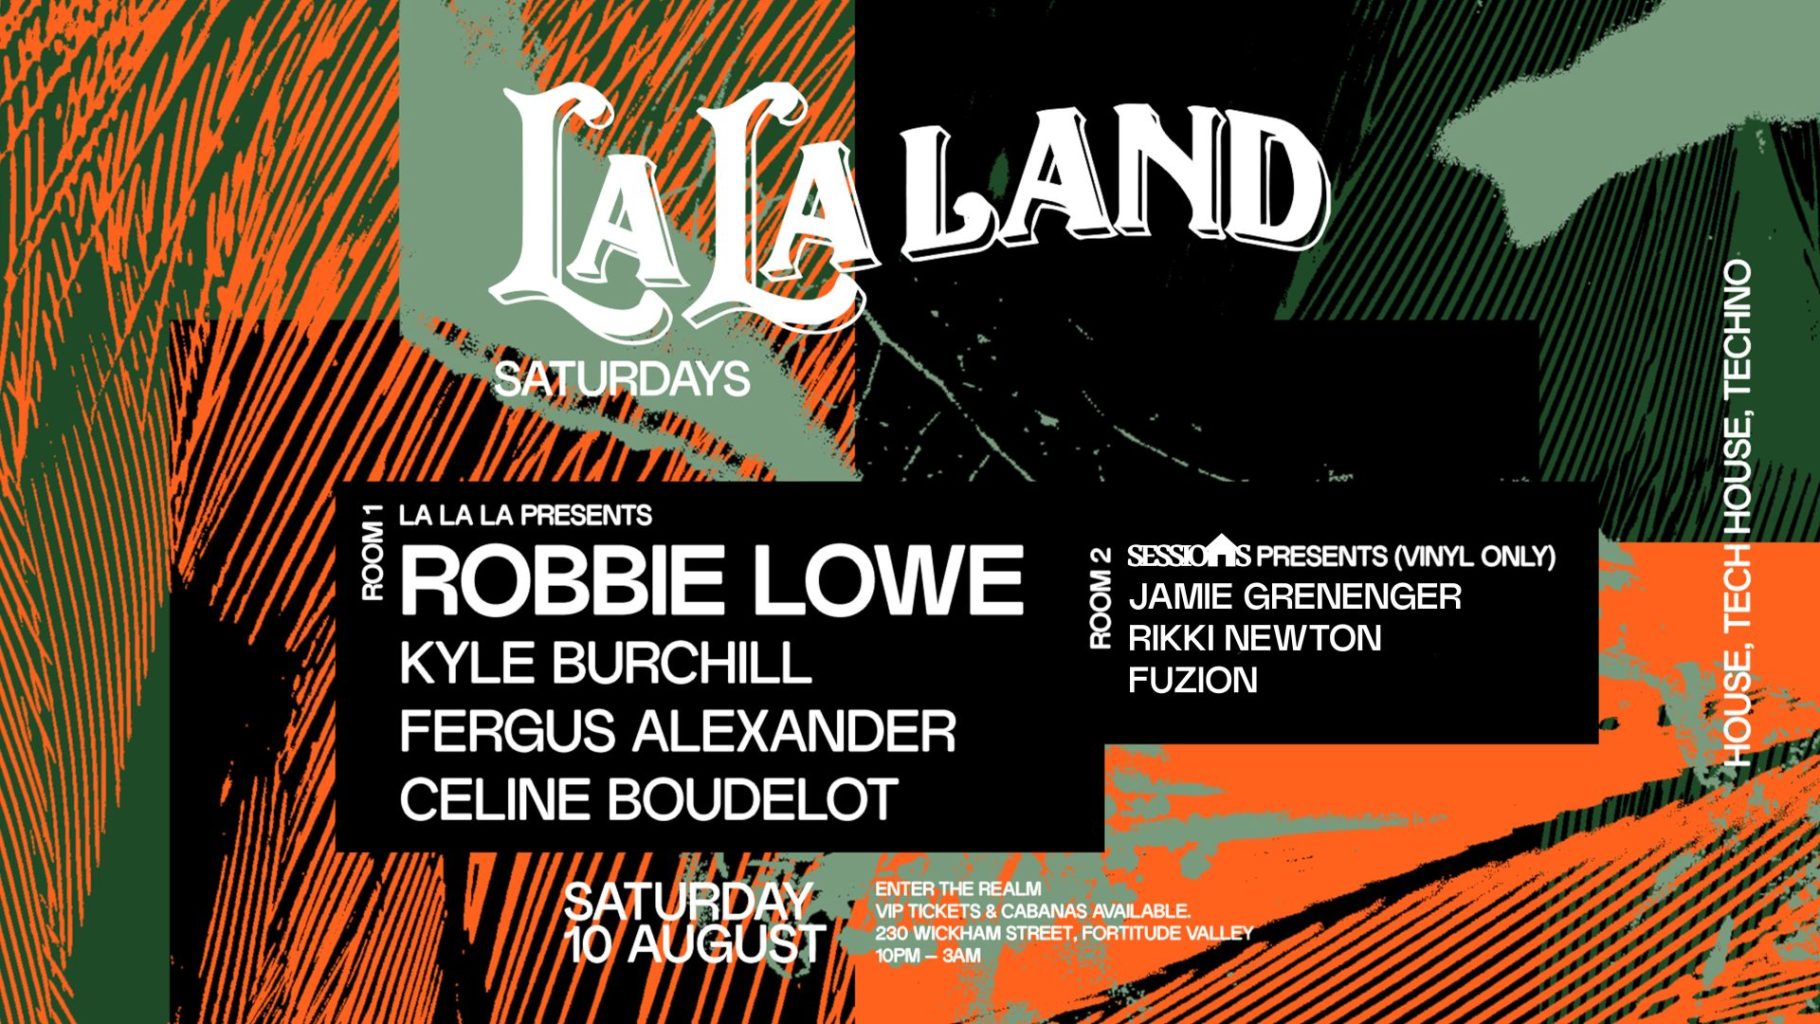 La La Land Saturdays ft. Robbie Lowe | Events at The Prince Consort